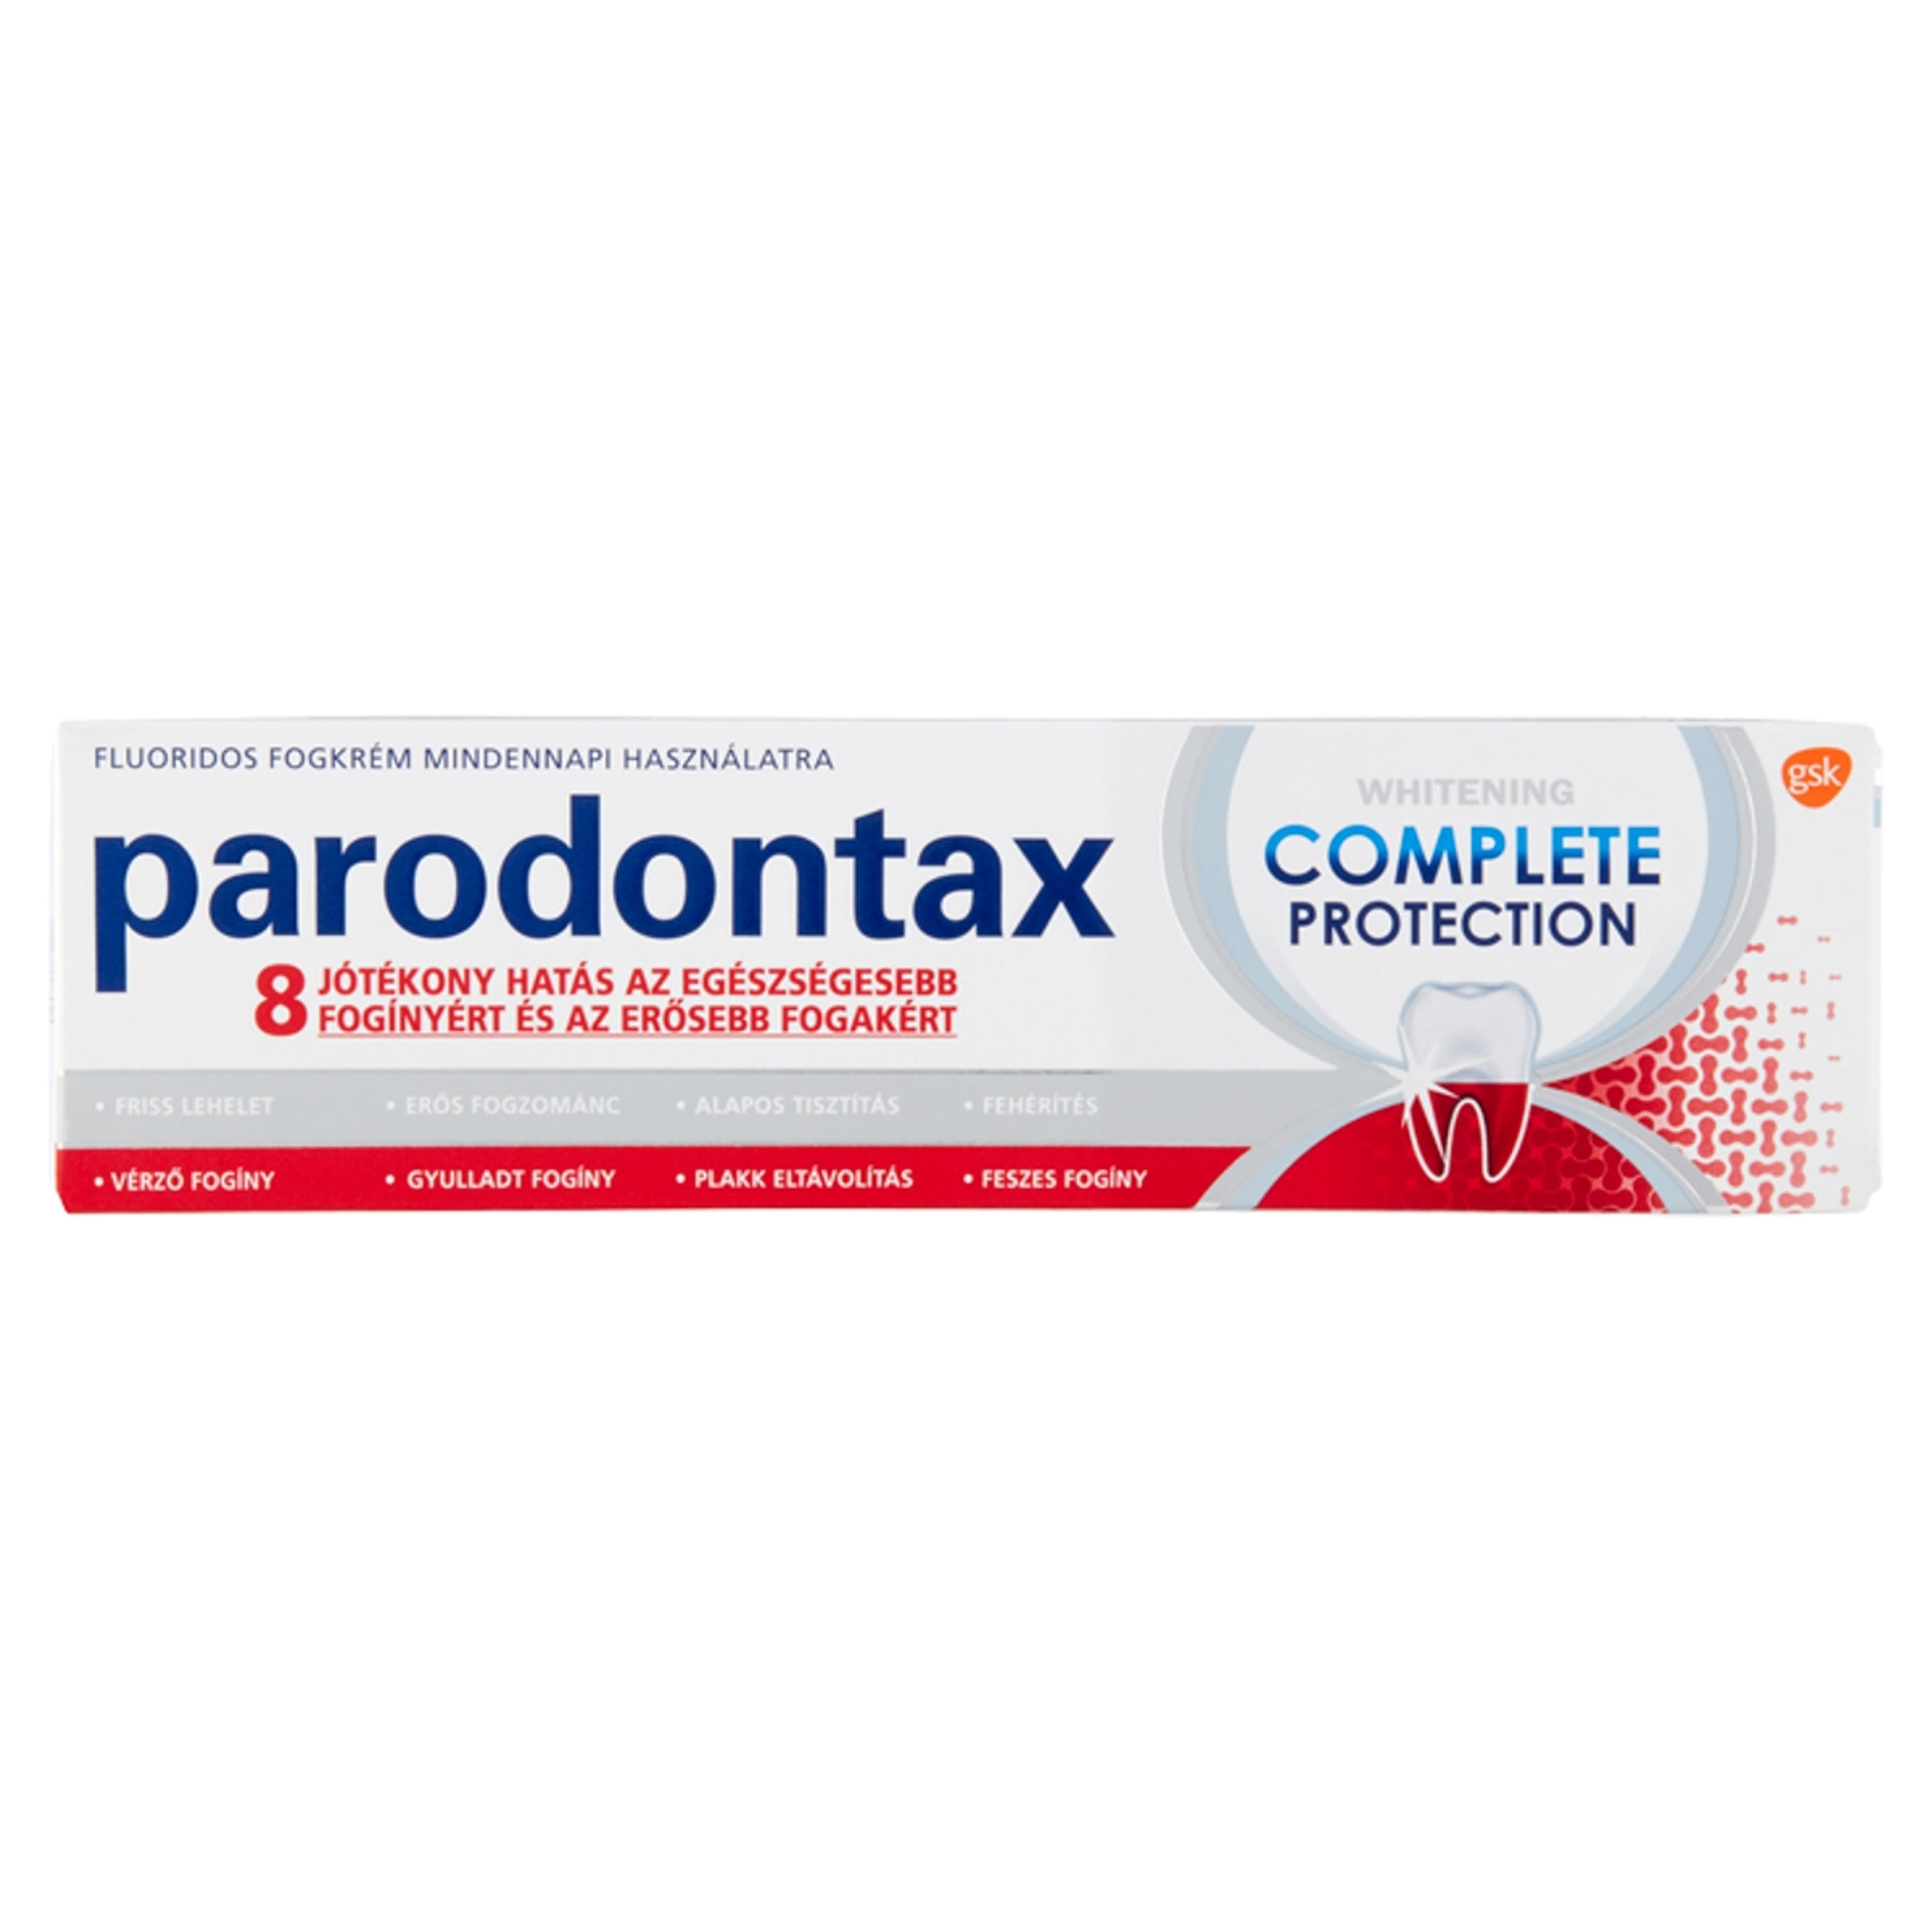 Parodontax Complete Protection Whitening fogkrém - 75 ml-1